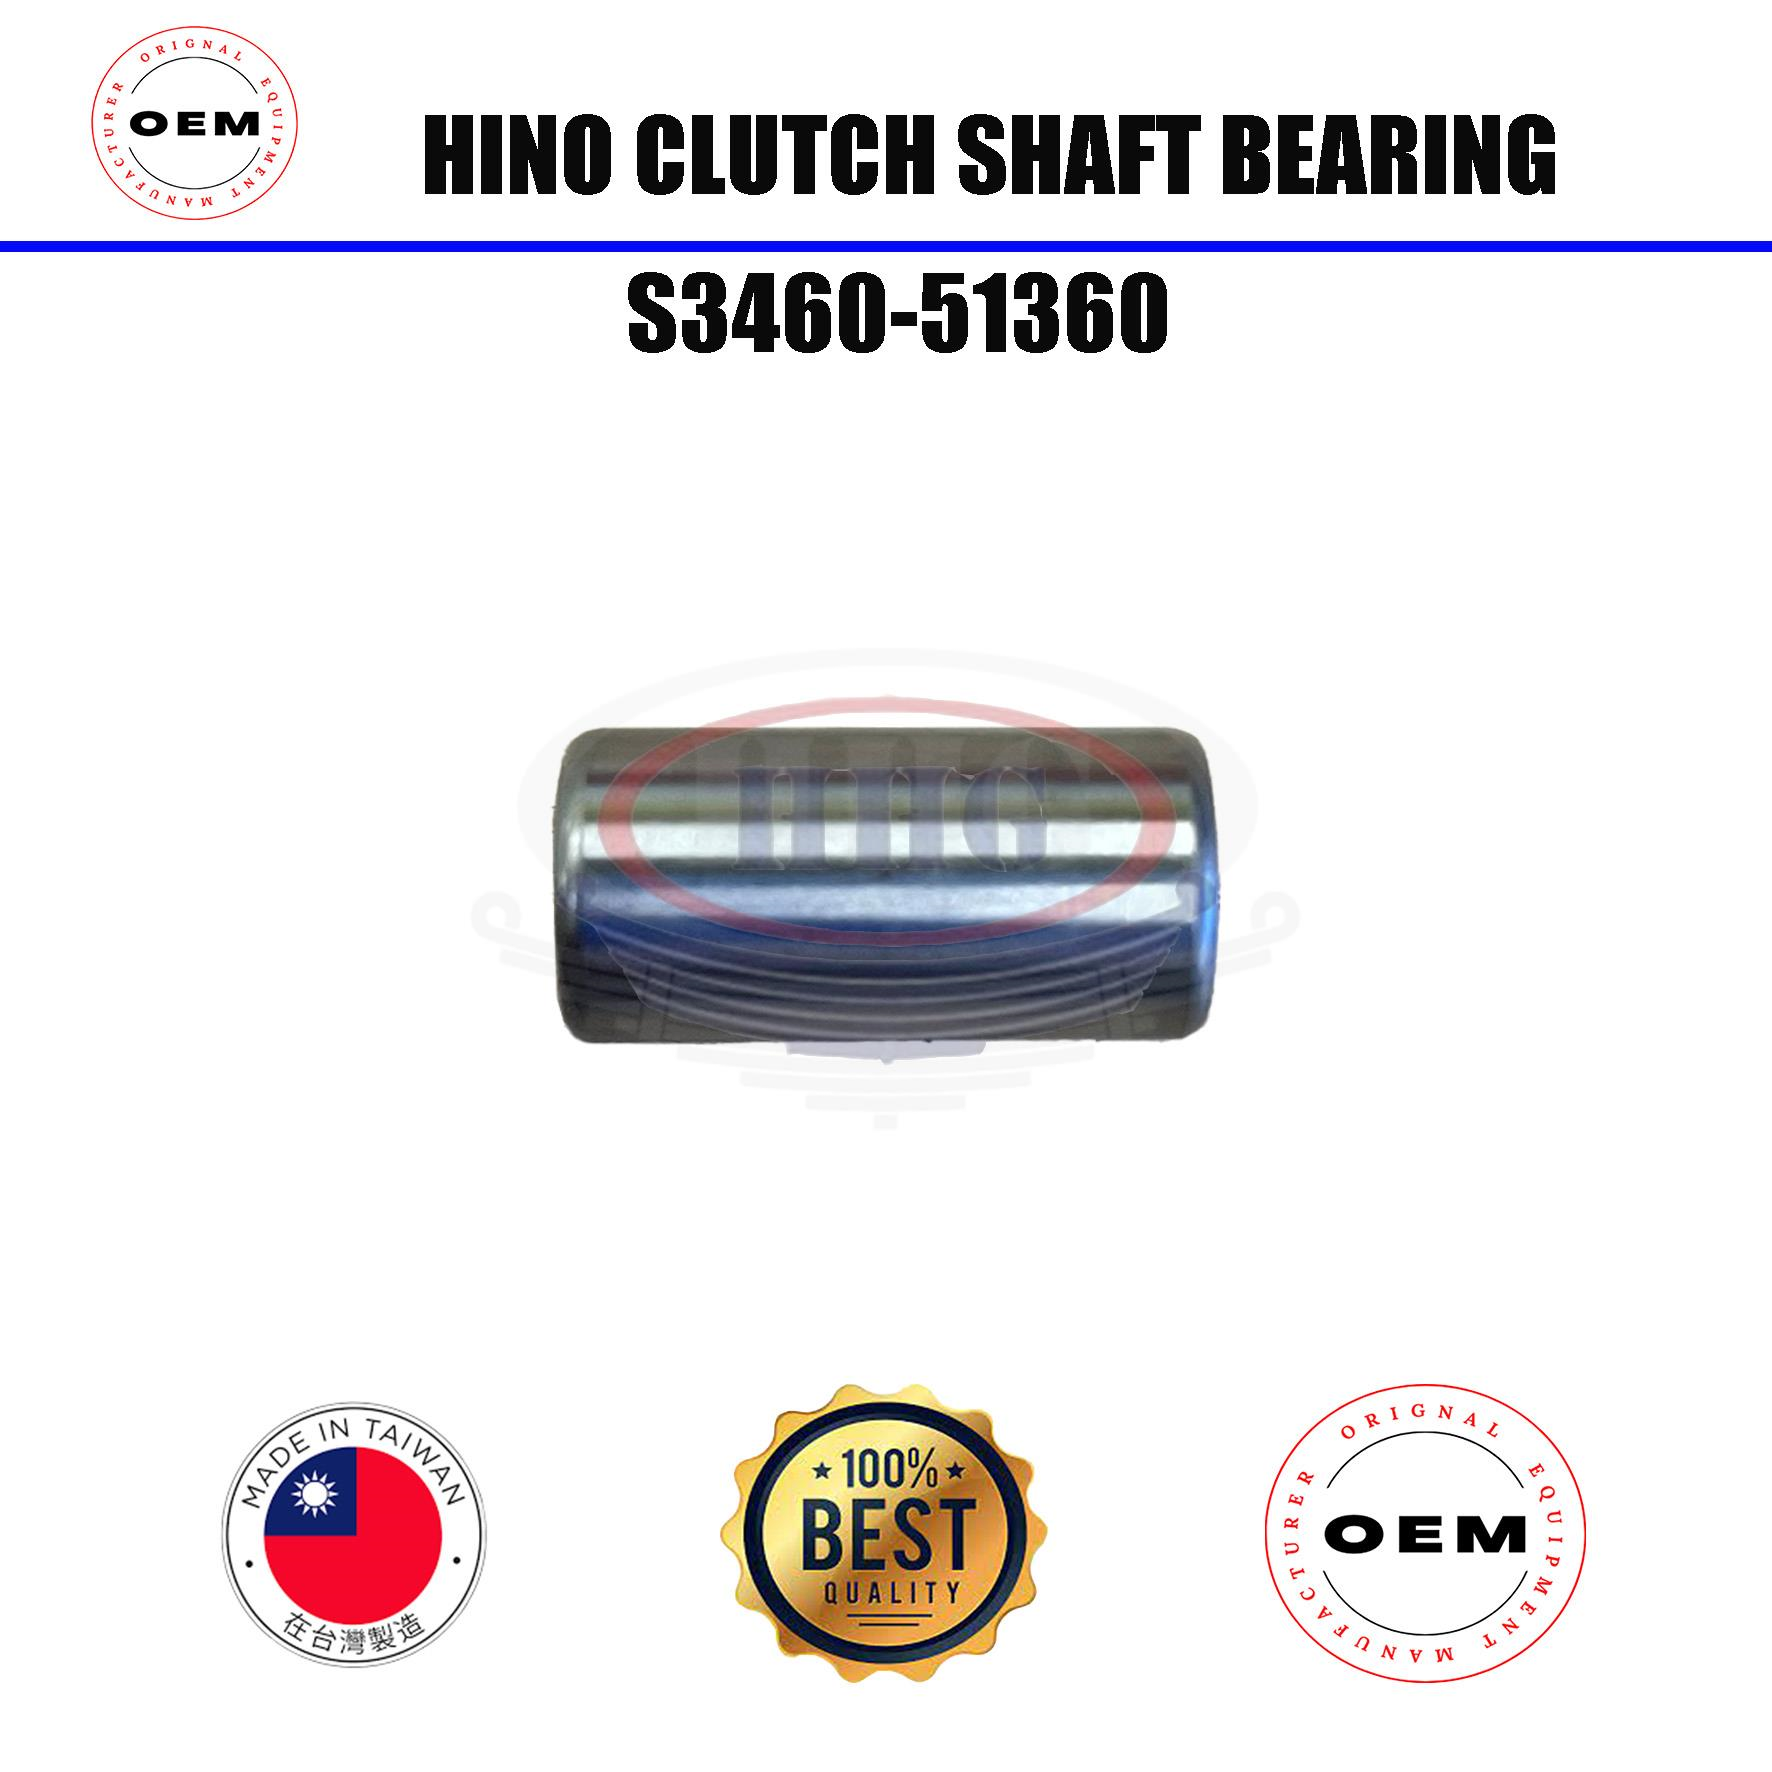 OEM RK1J Hino Clutch Shaft Bearing (S3460-51360)